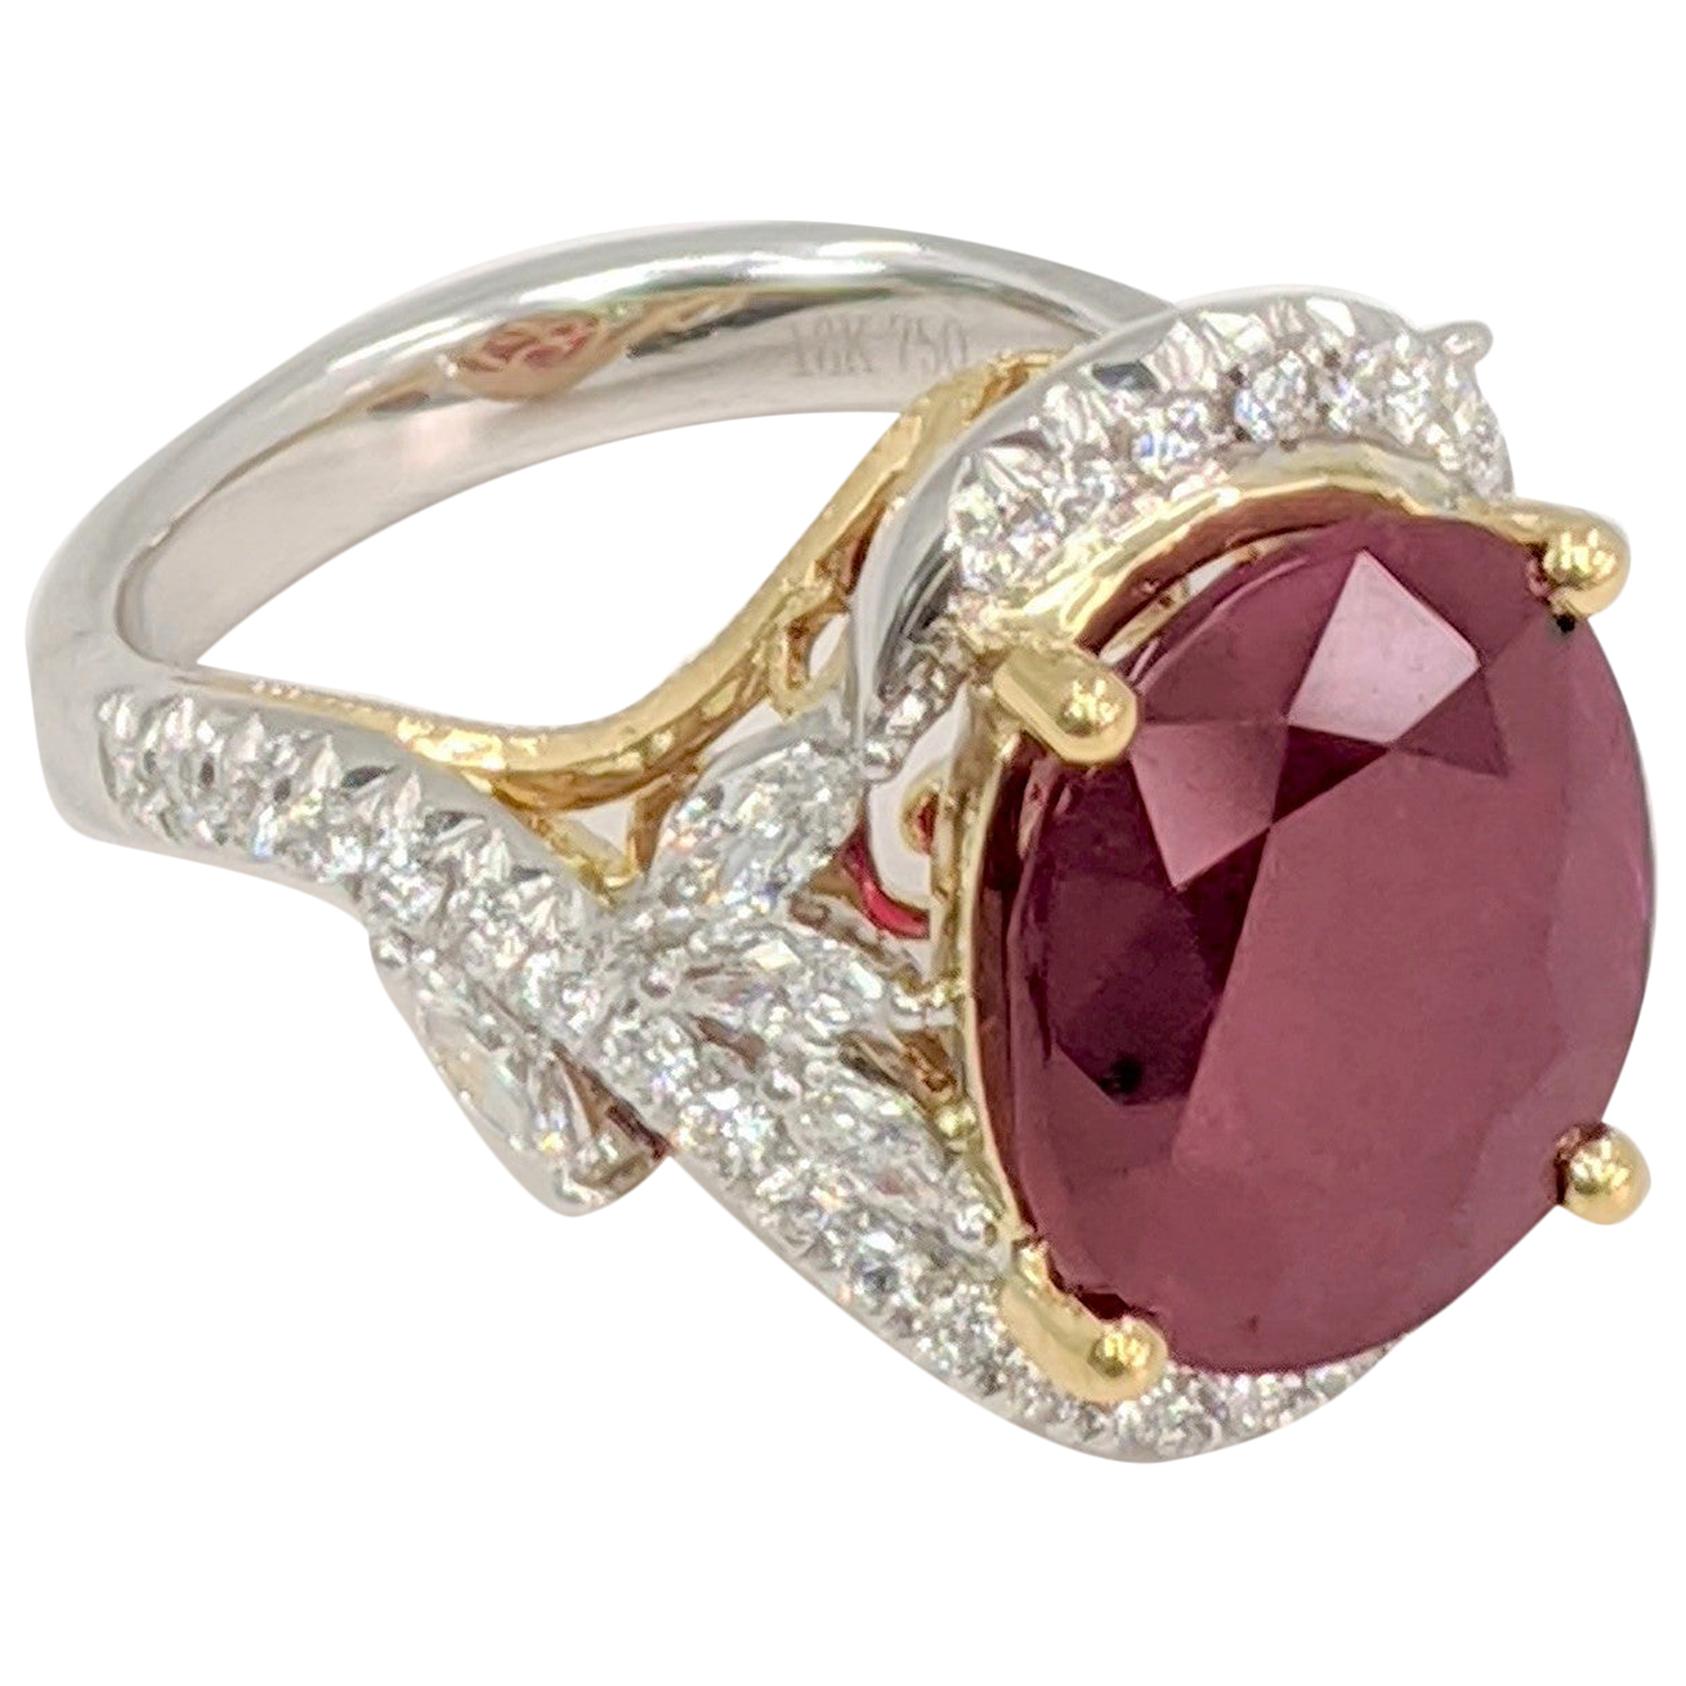 Ruby Stone Ring With White Gold & Yellow Gold. White Diamond 18k